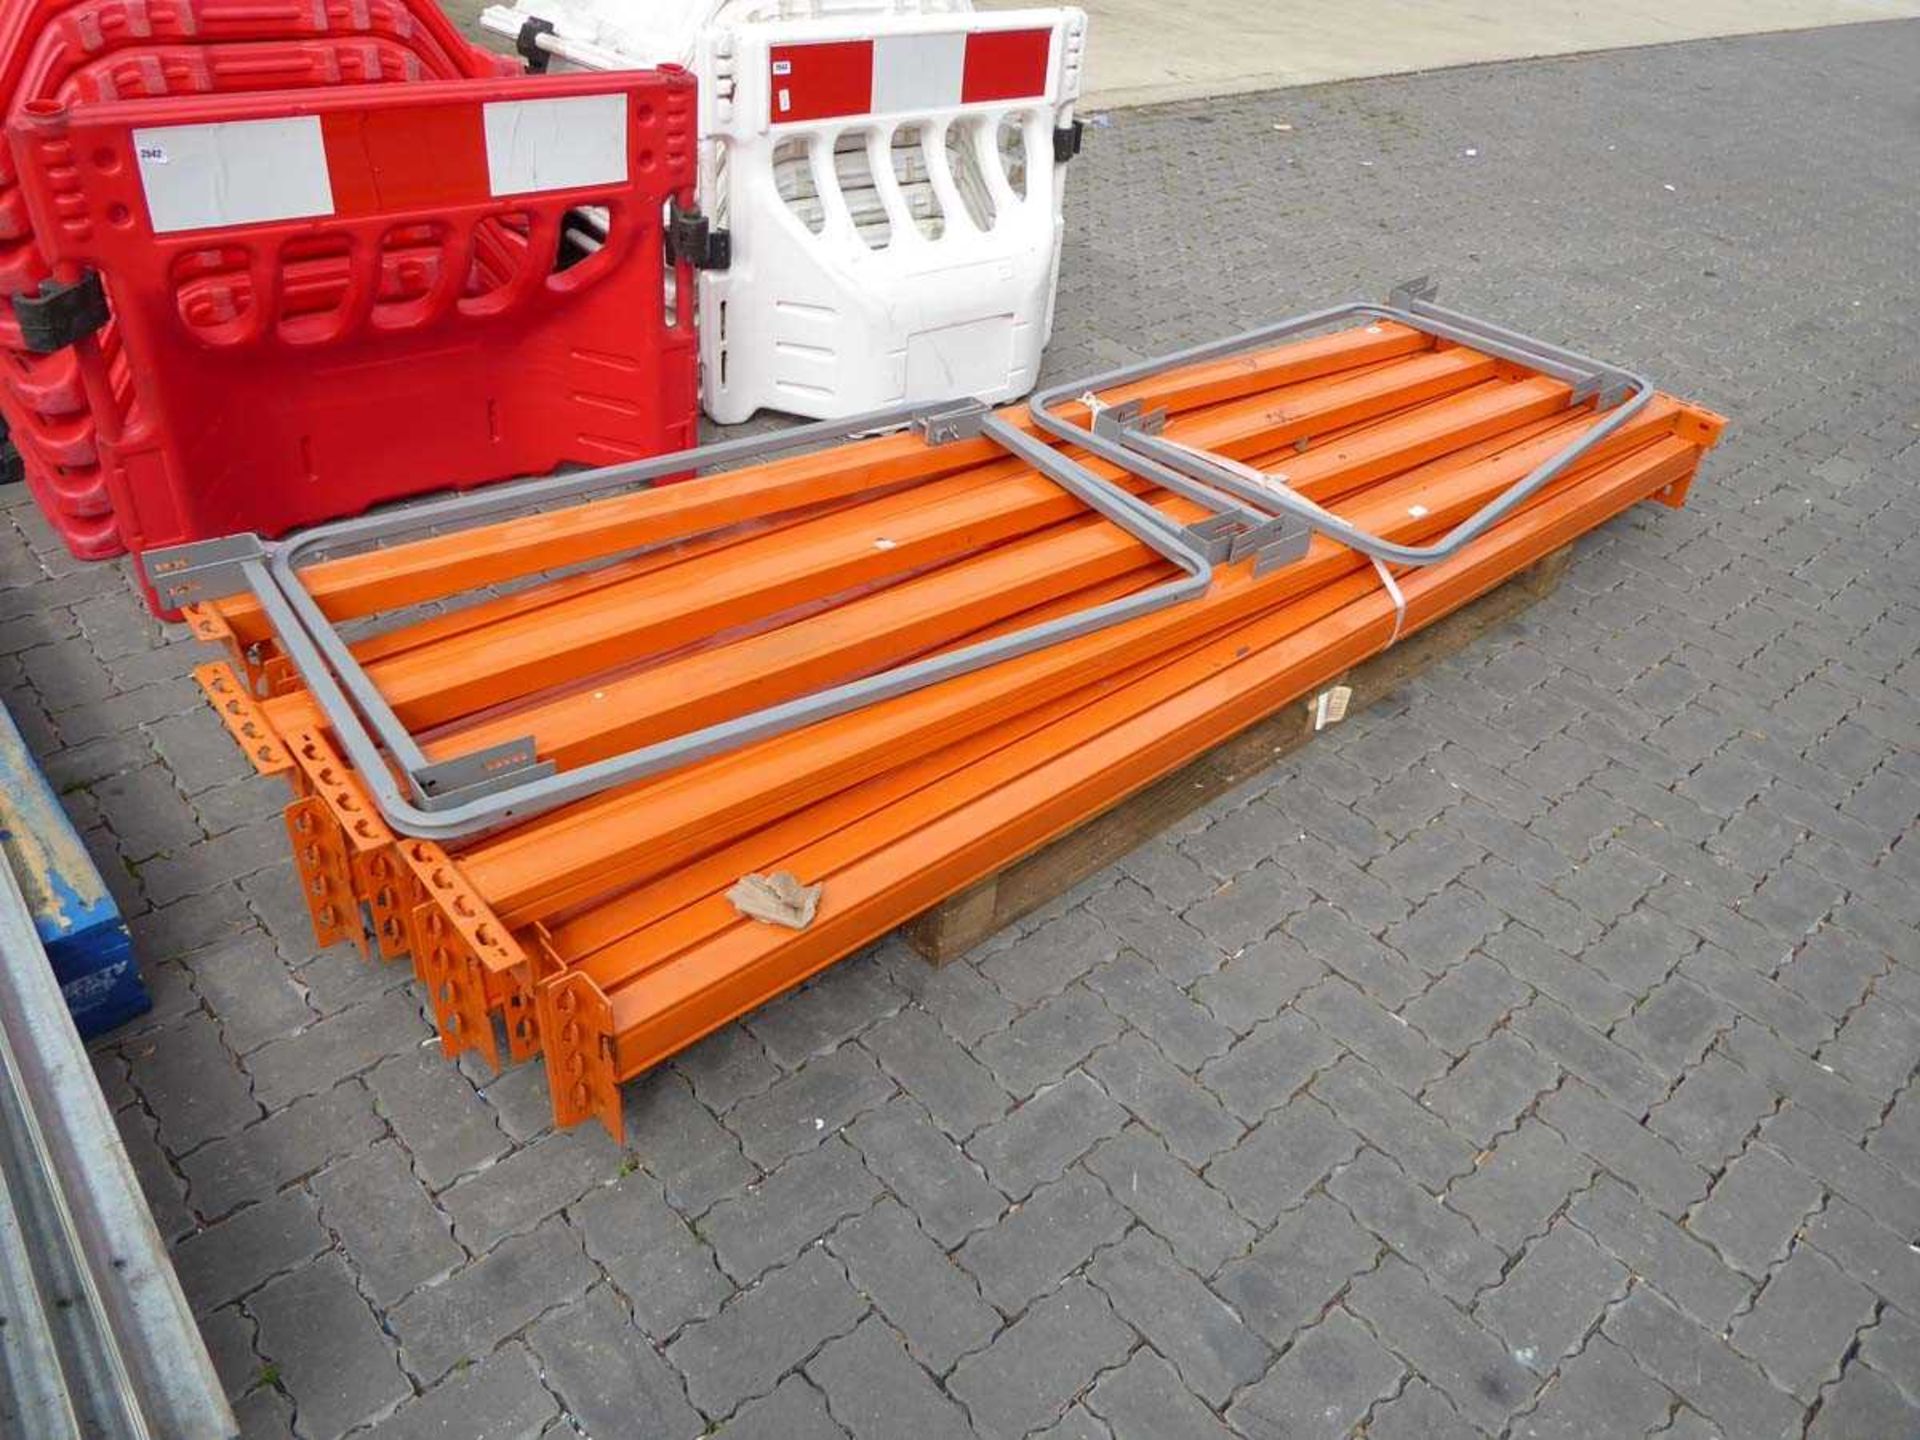 Pallet containing large quantity of orange metal racking cross beams